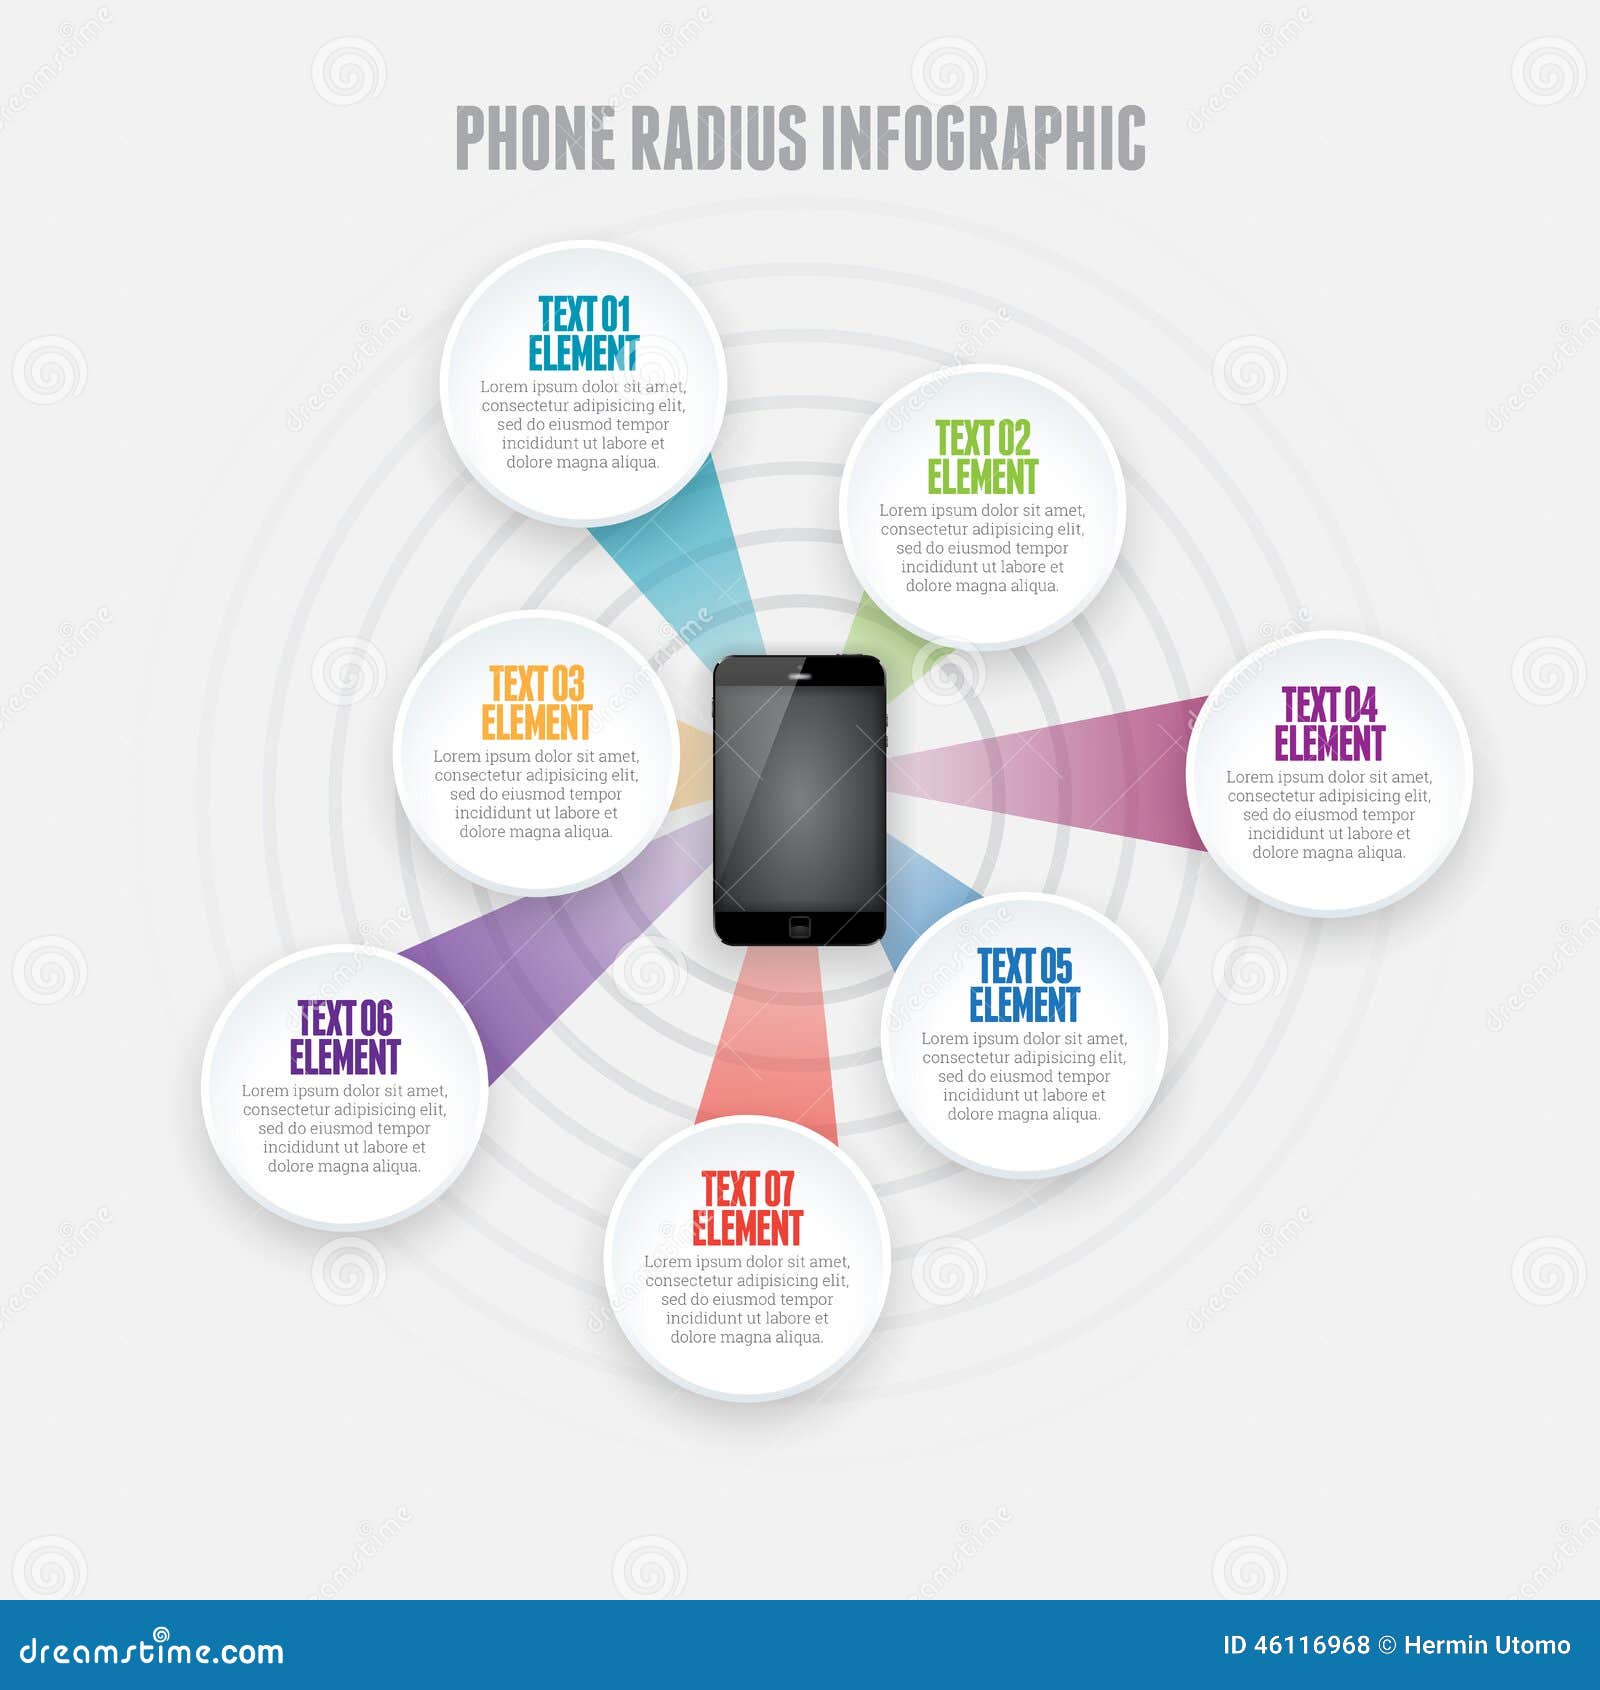 phone radius infographic